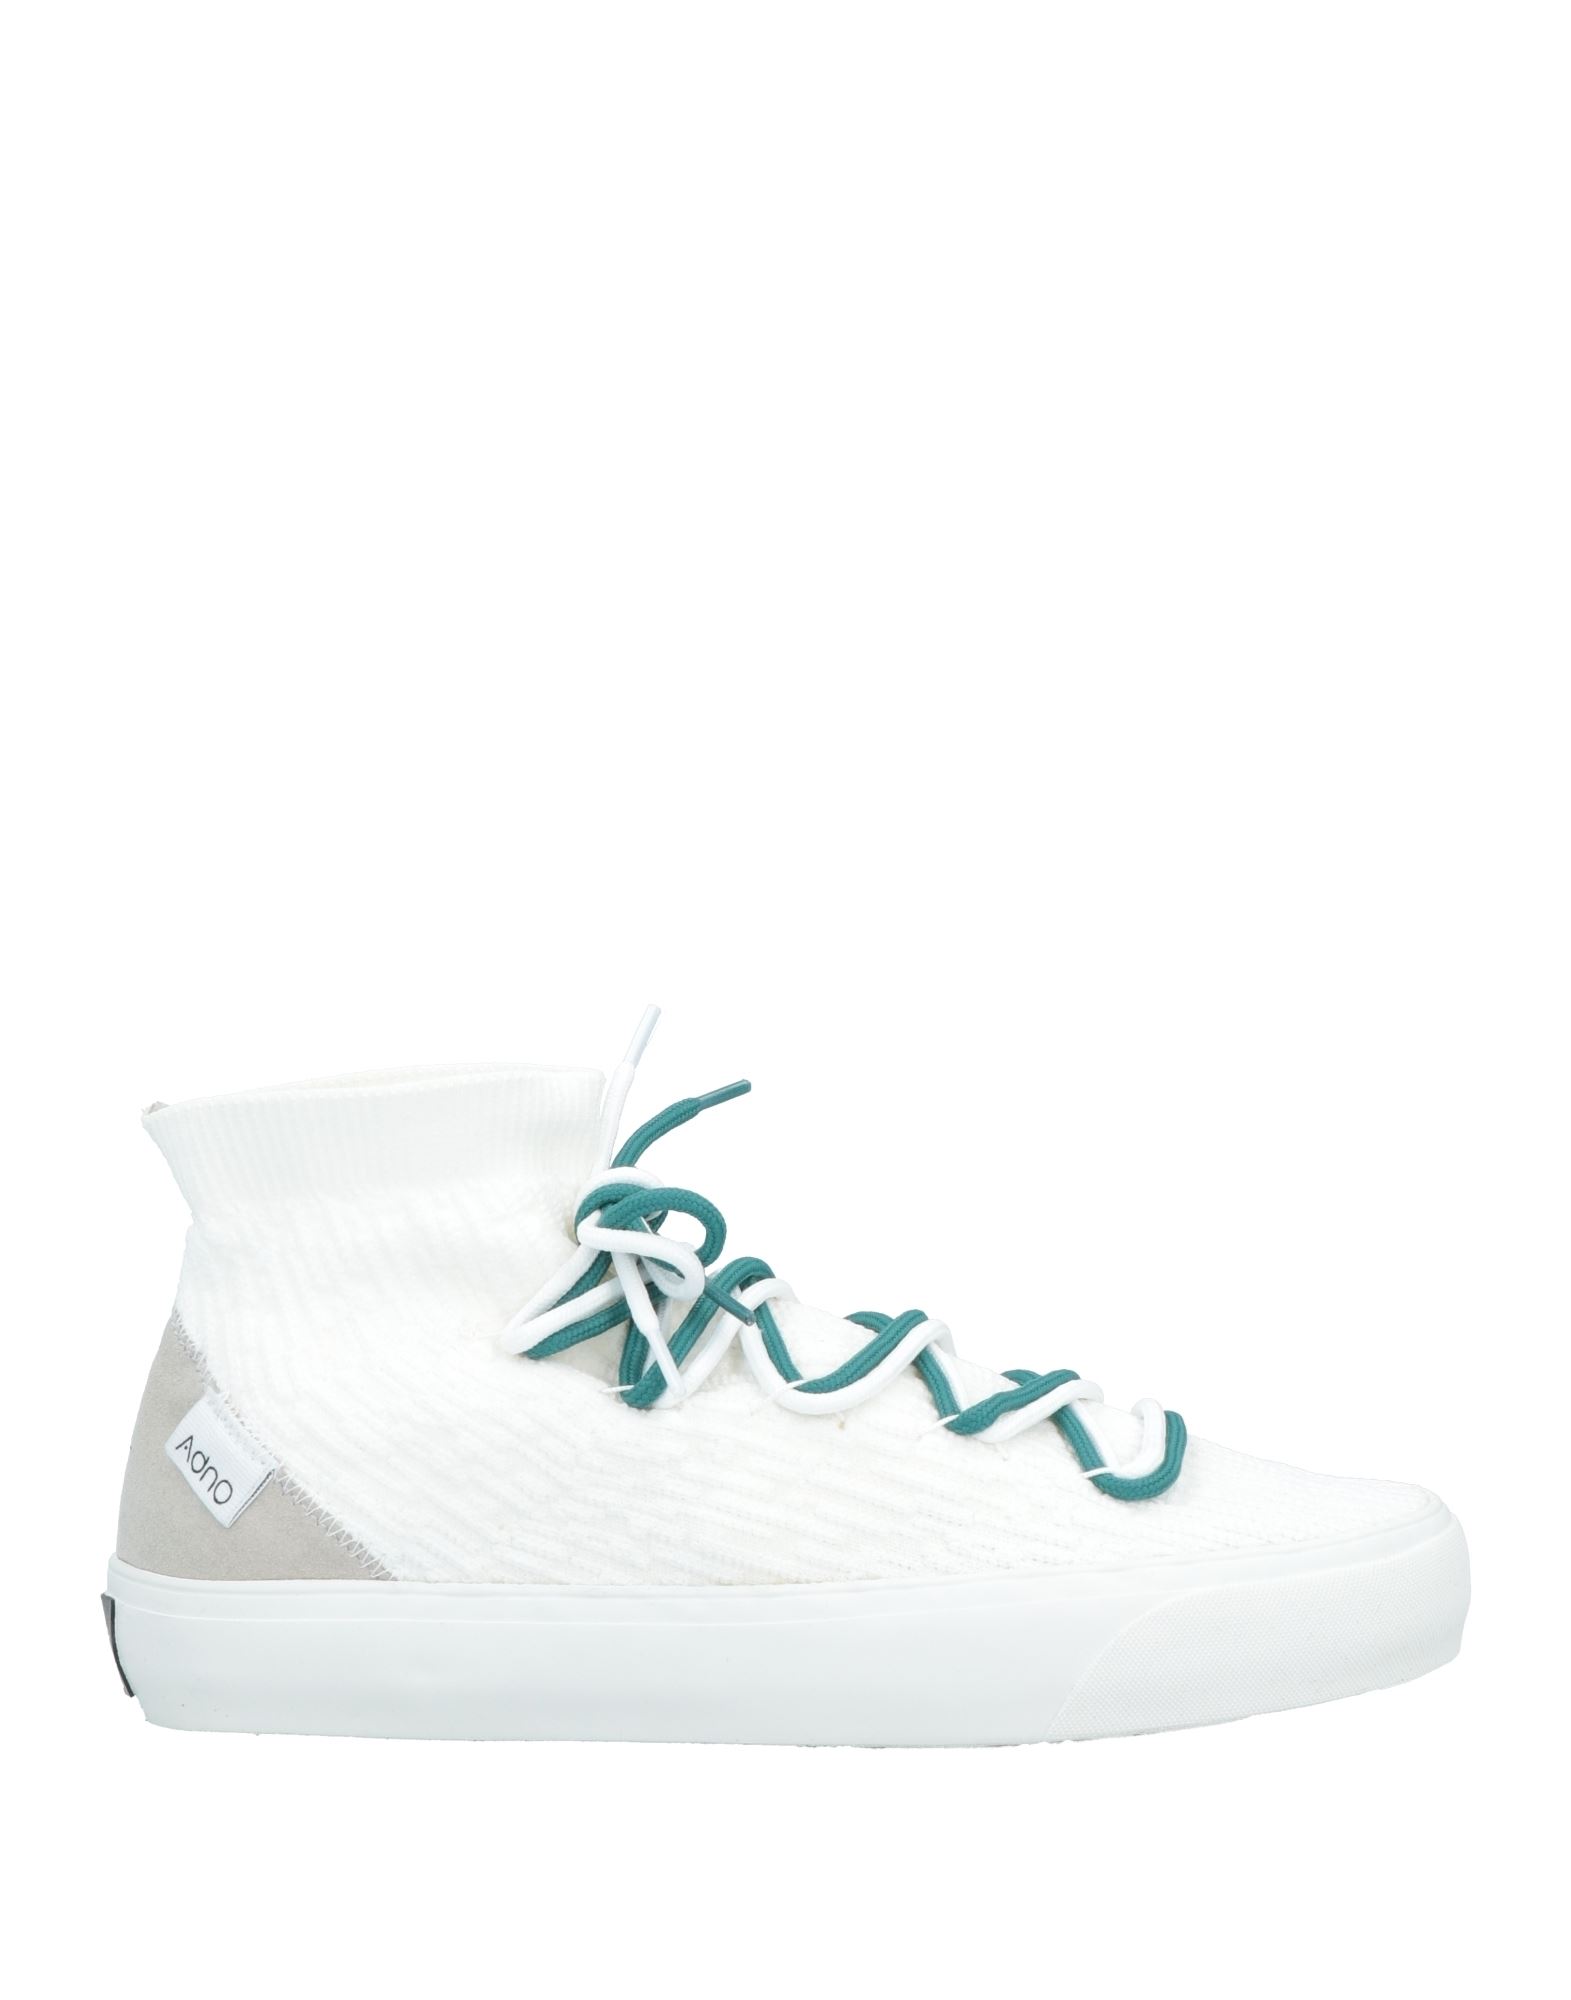 Adno Sneakers In White